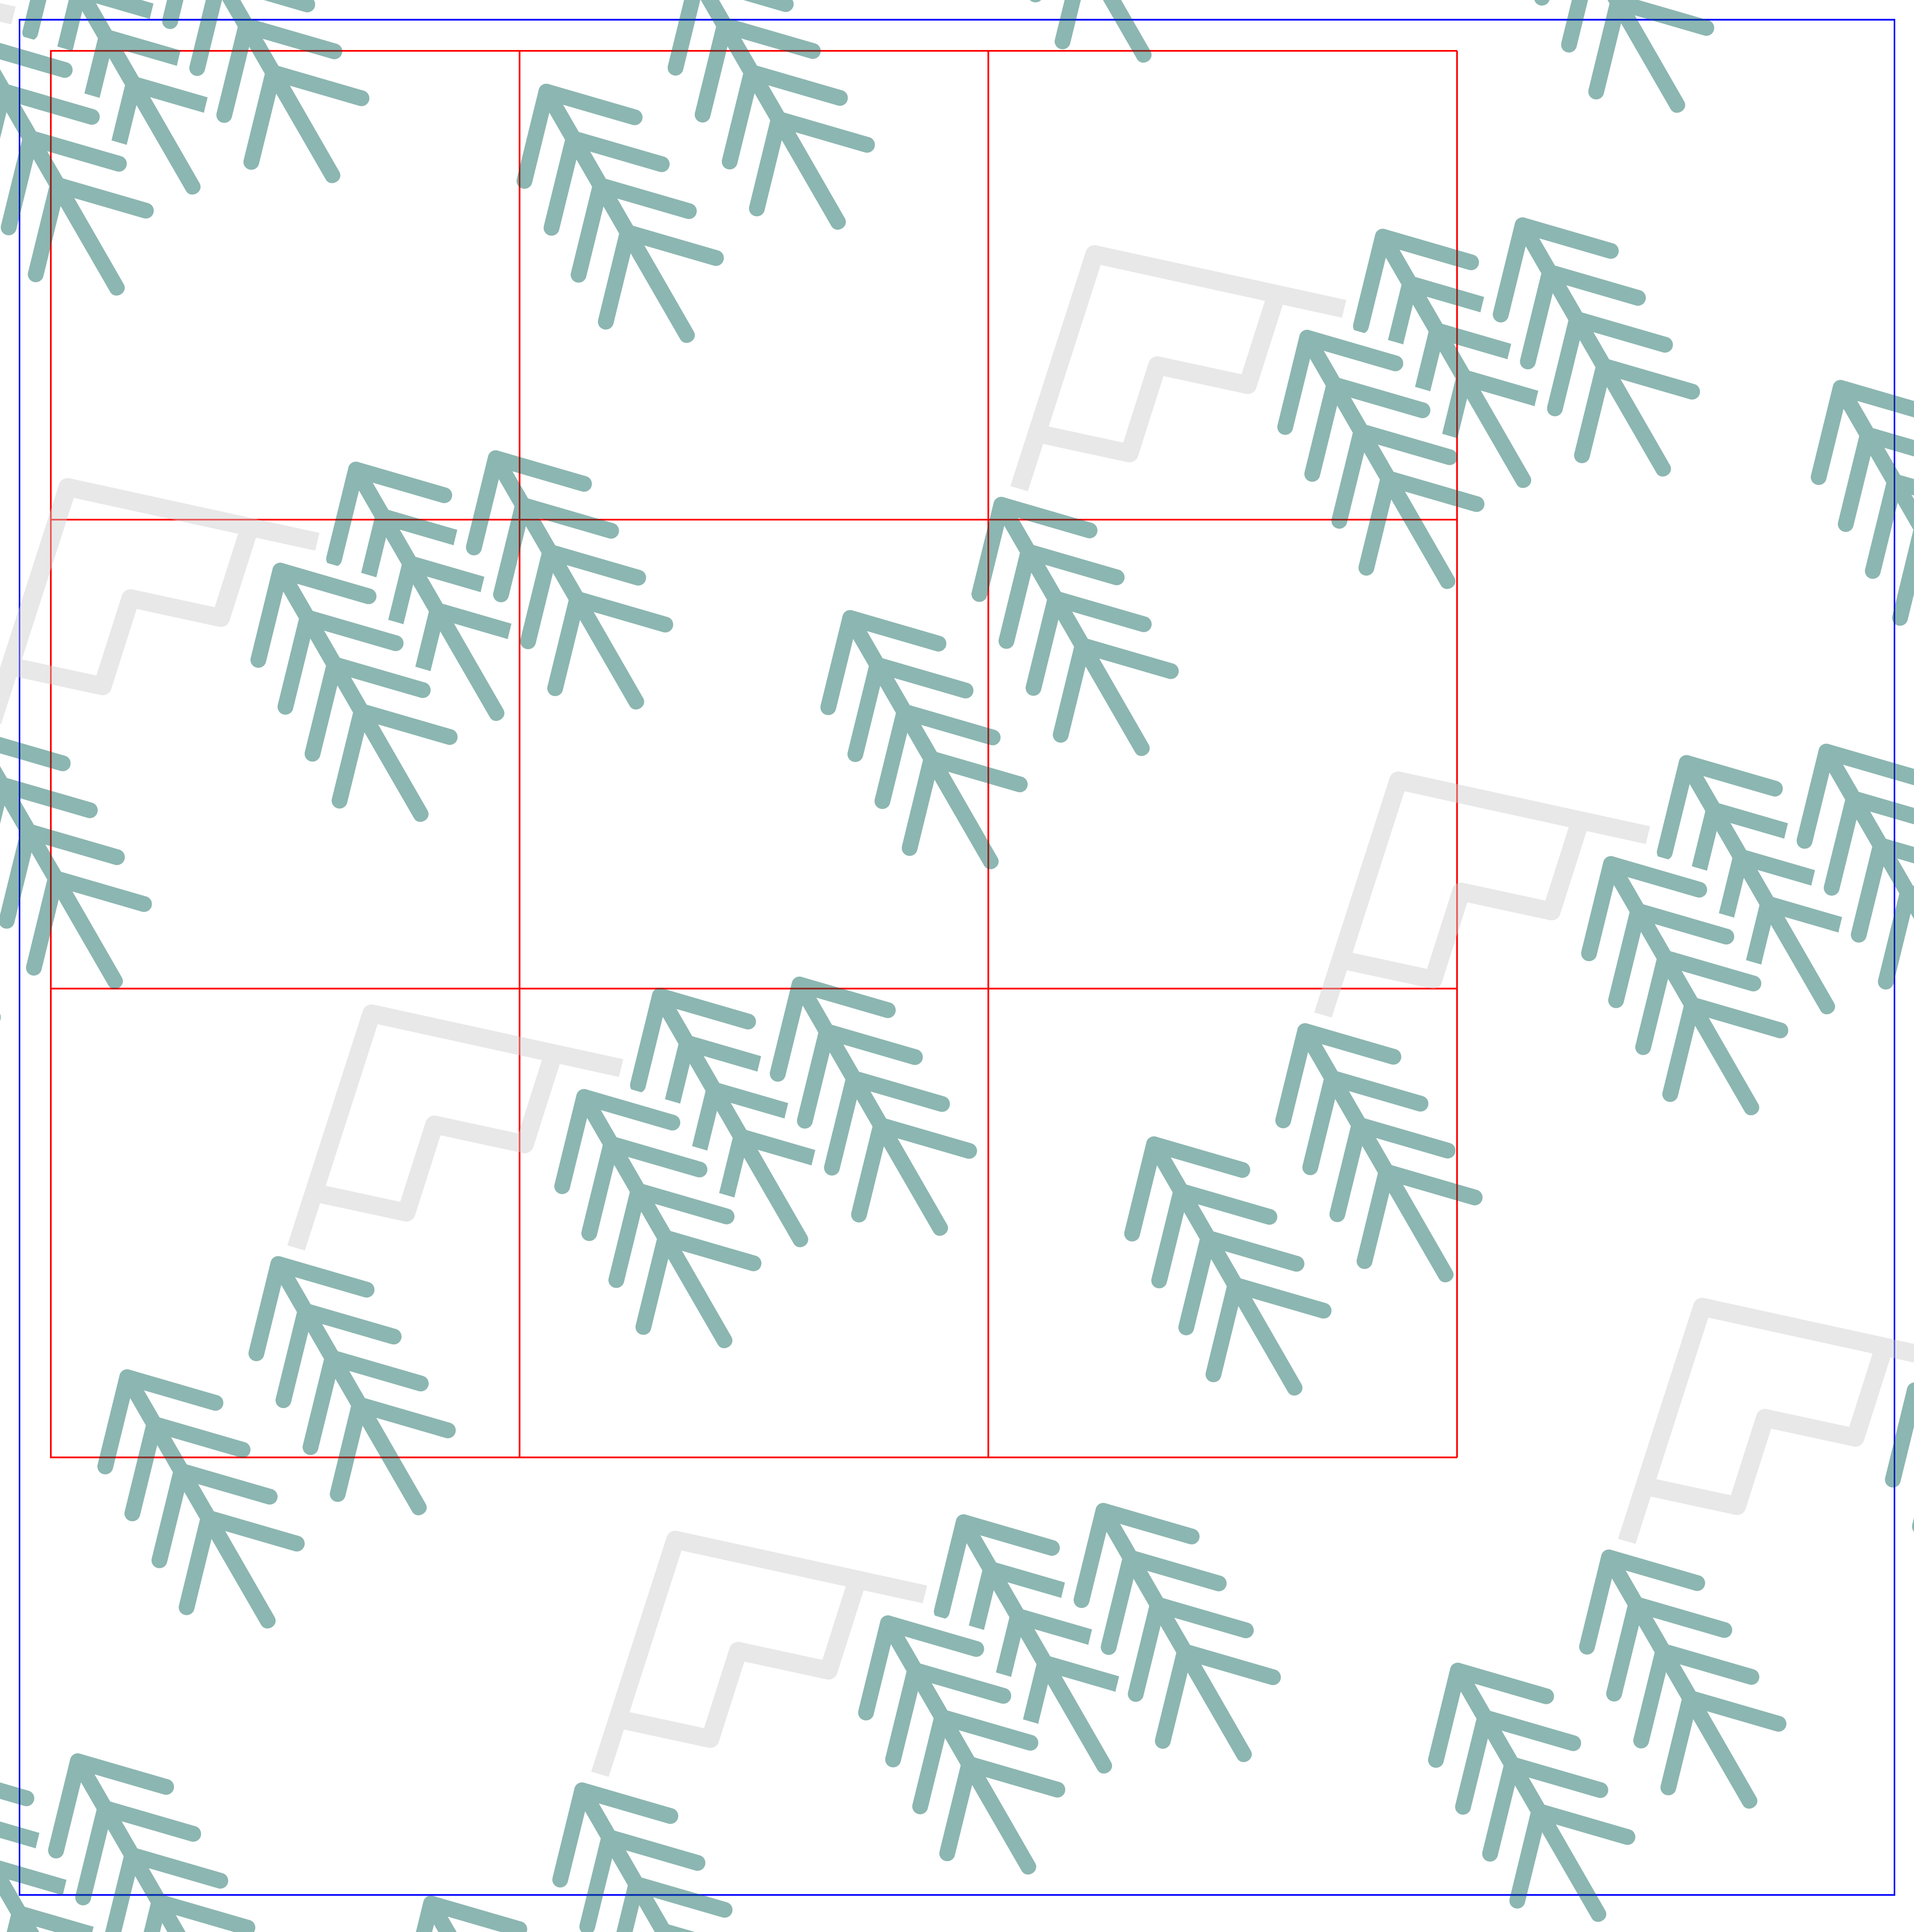 Digital Laser Cutting Template: 3" x 3" Rectangles - 12" x 12" Sheet Size Digital Laser Engraving Files Craftworks NW 